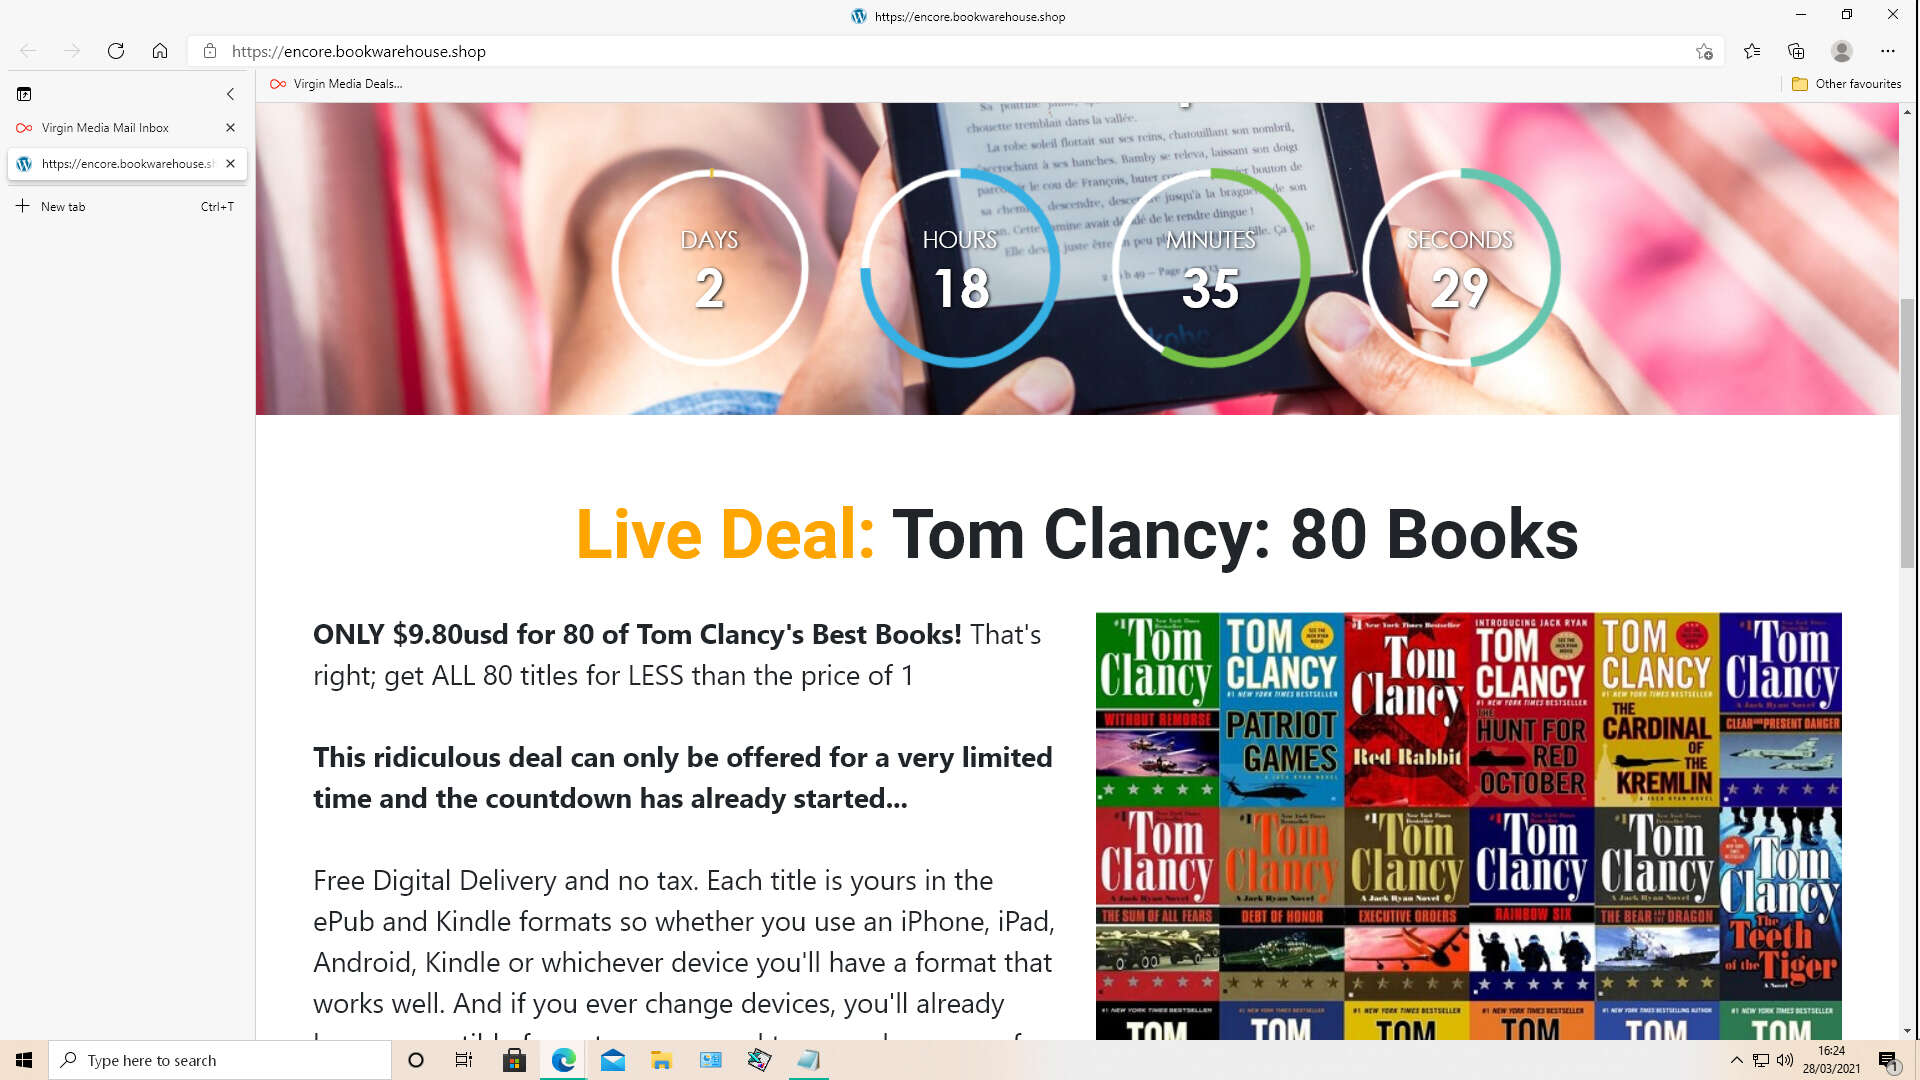 tom clancy books offer.jpg